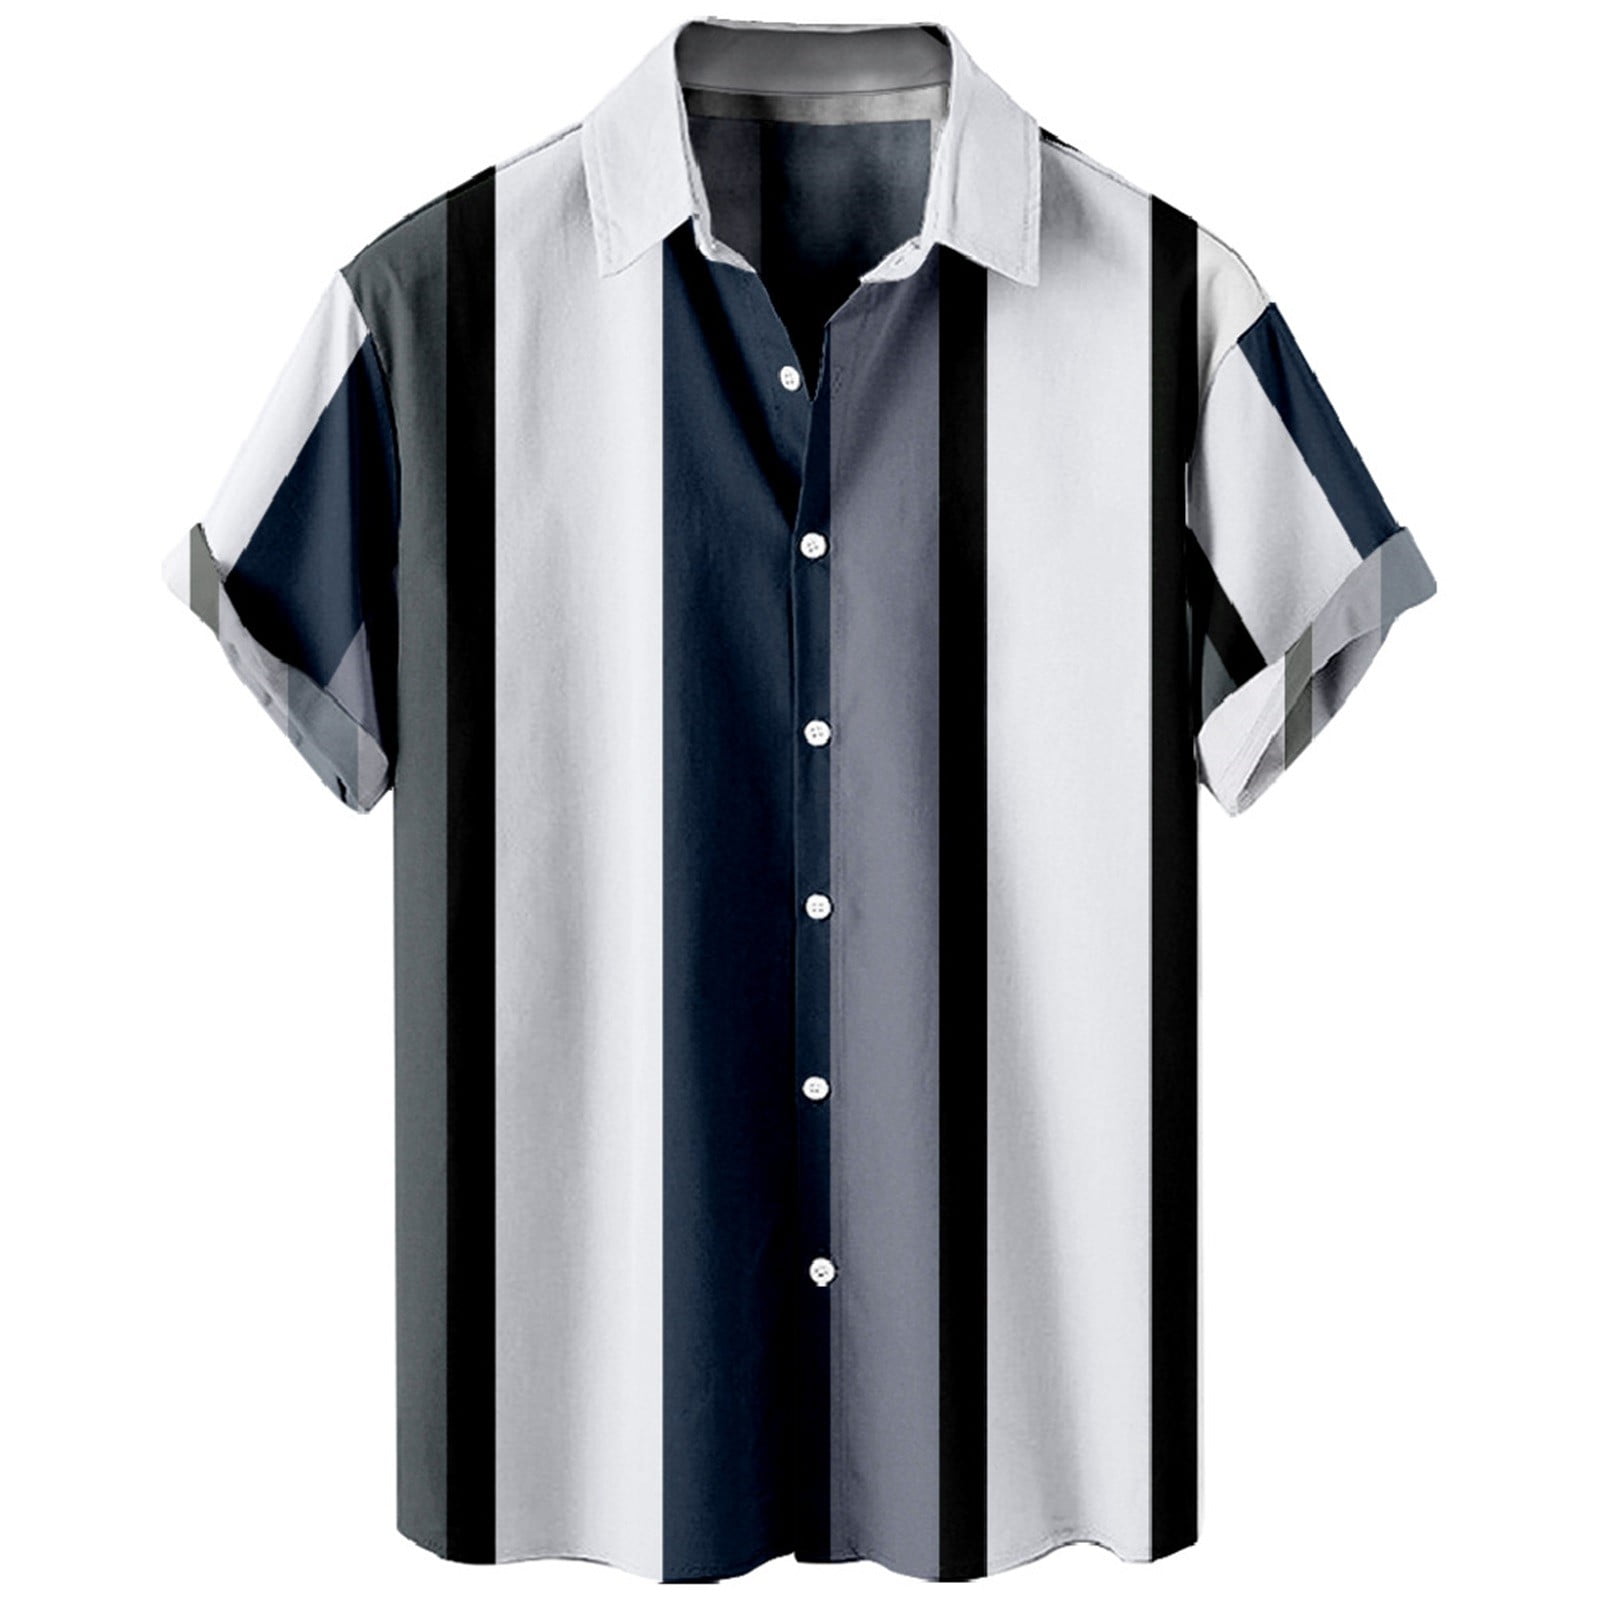 AdBFJAF Dress Shirts for Men Short Sleeve Xl Fashion Trend Color Stripe ...